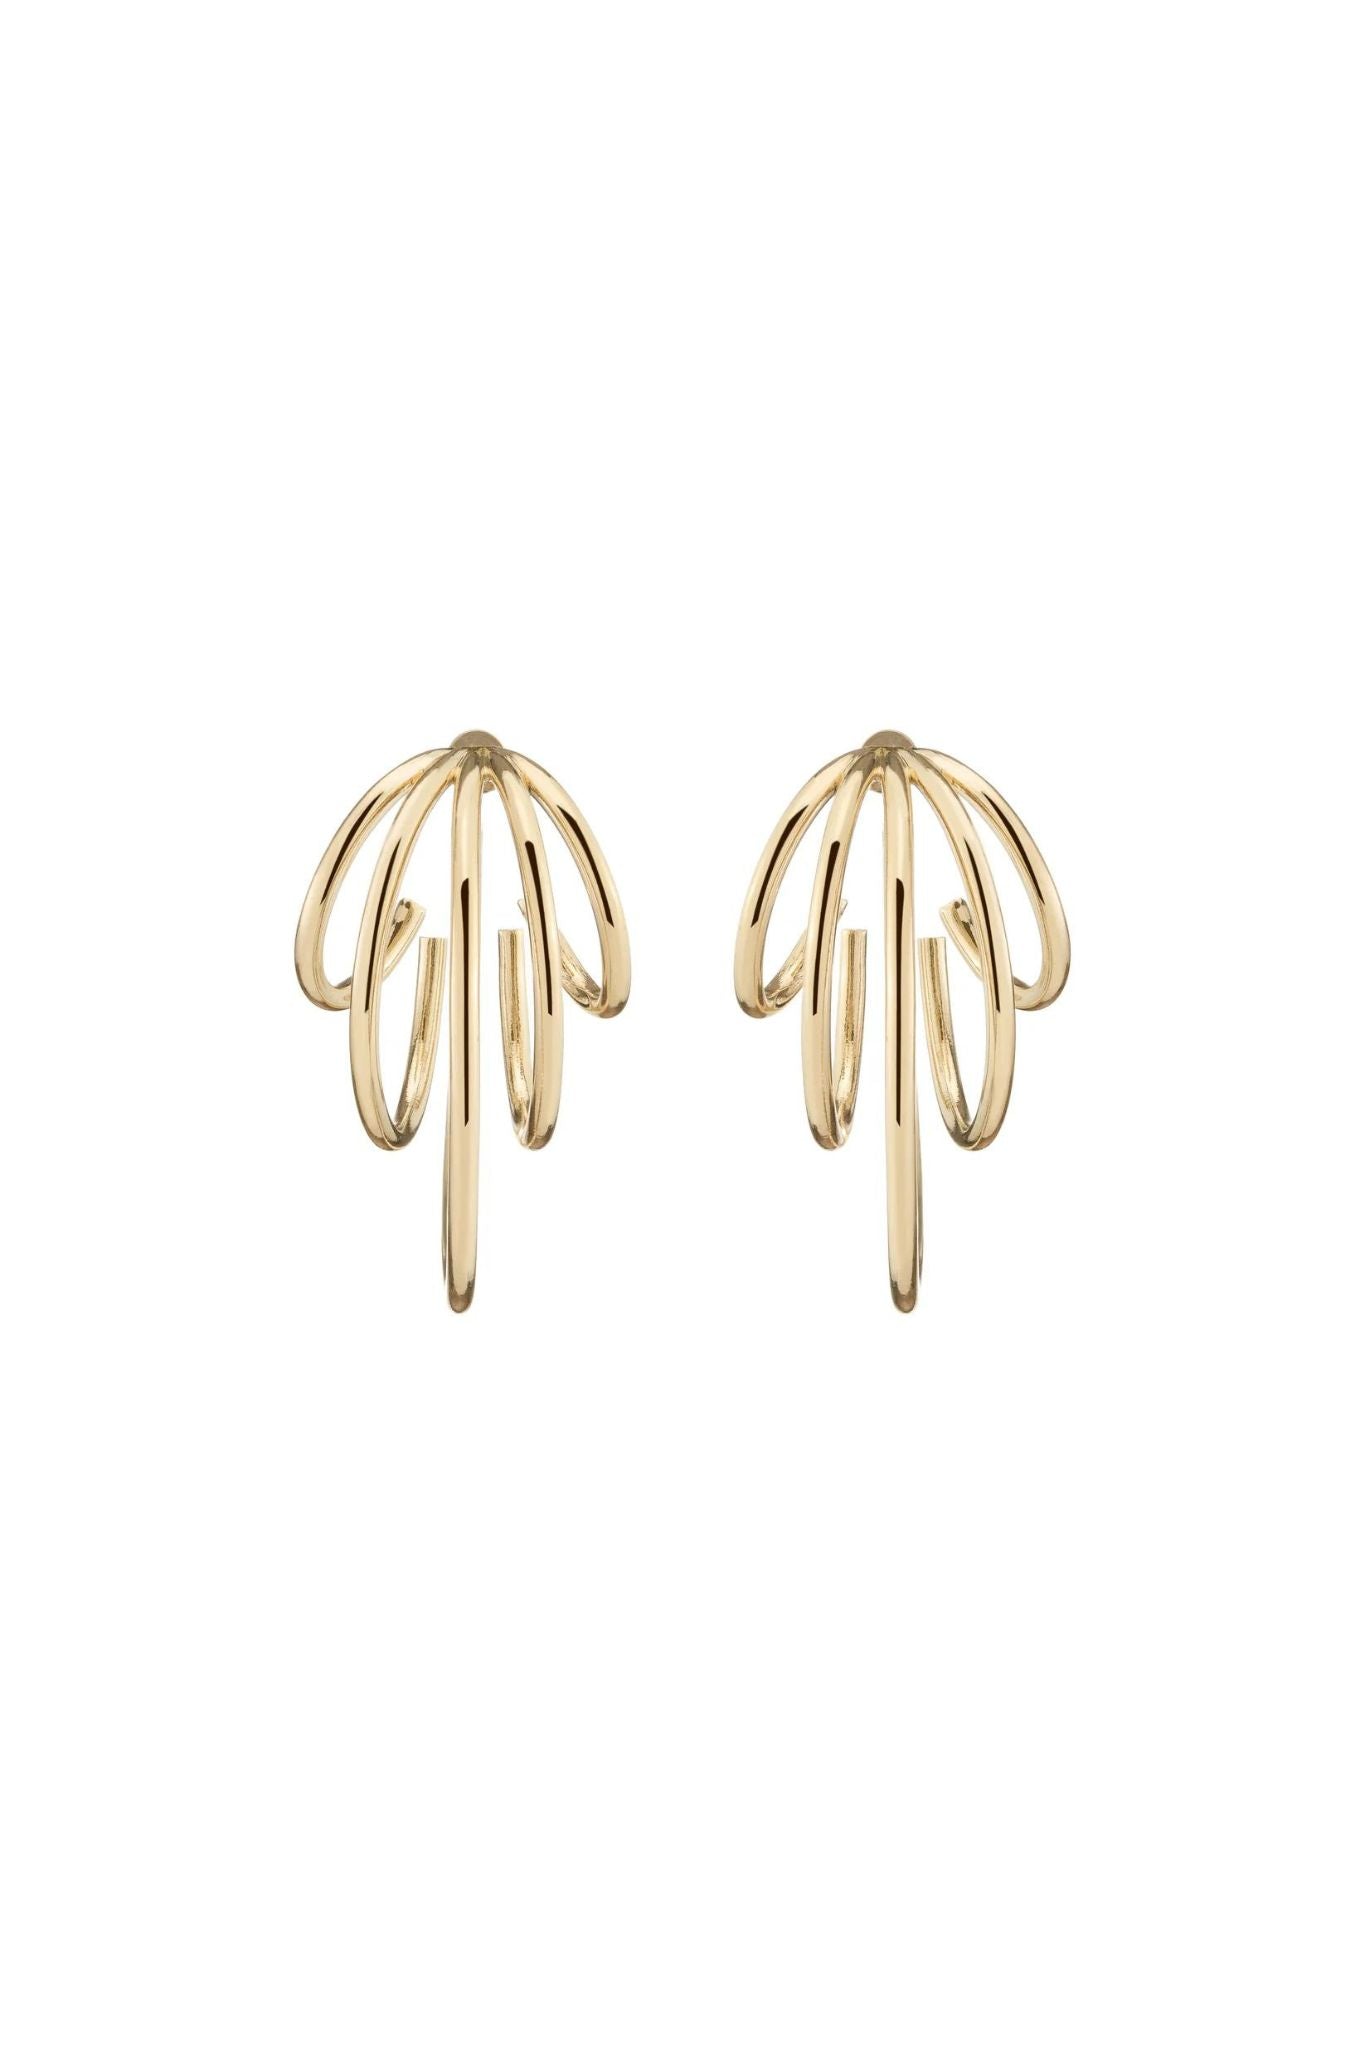 Puffy Heart 10kt gold-plated earrings in gold - Jennifer Fisher